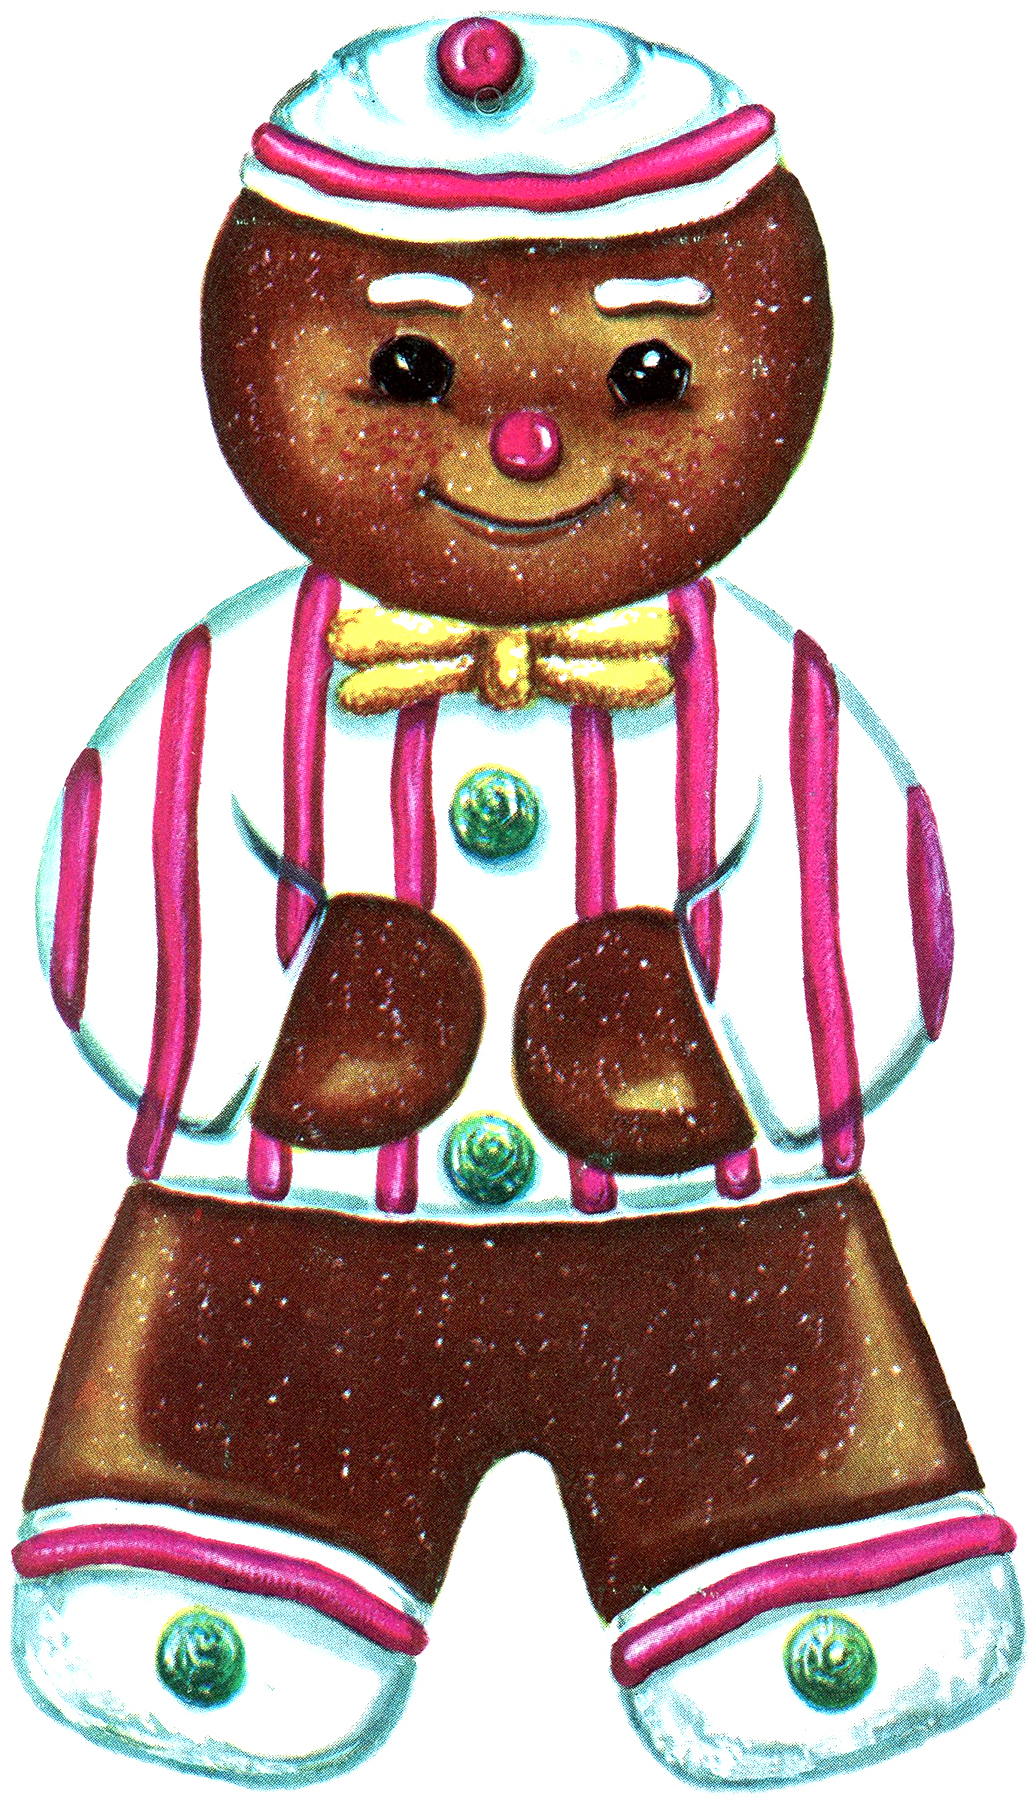 Printable Ornaments Gingerbread Man   Retro Bird   The Graphics Fairy